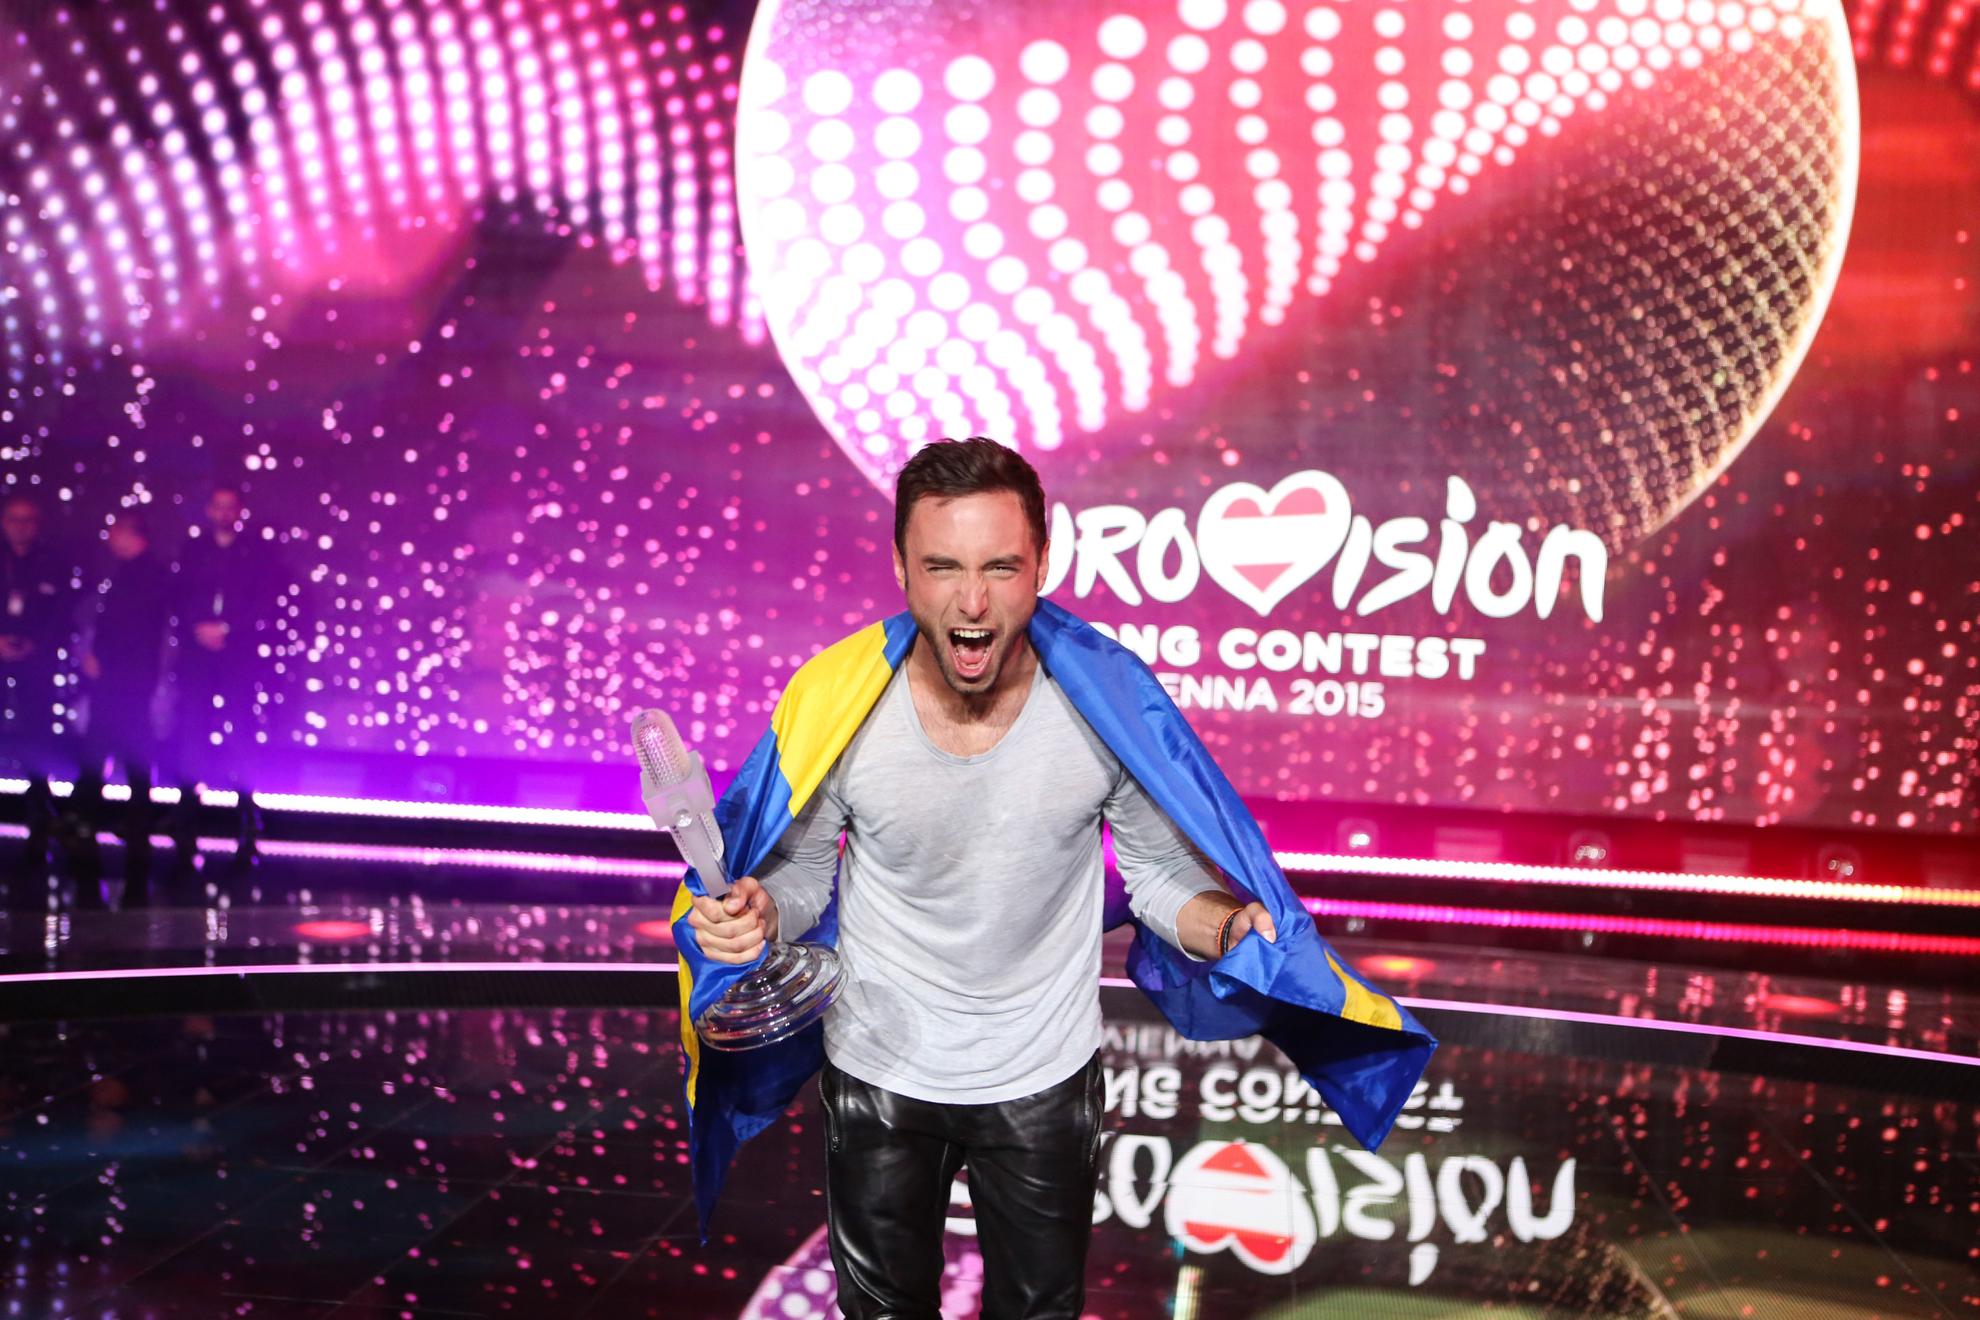 Måns Zelmerlöw Eurovision Song Contest in Wien 2015